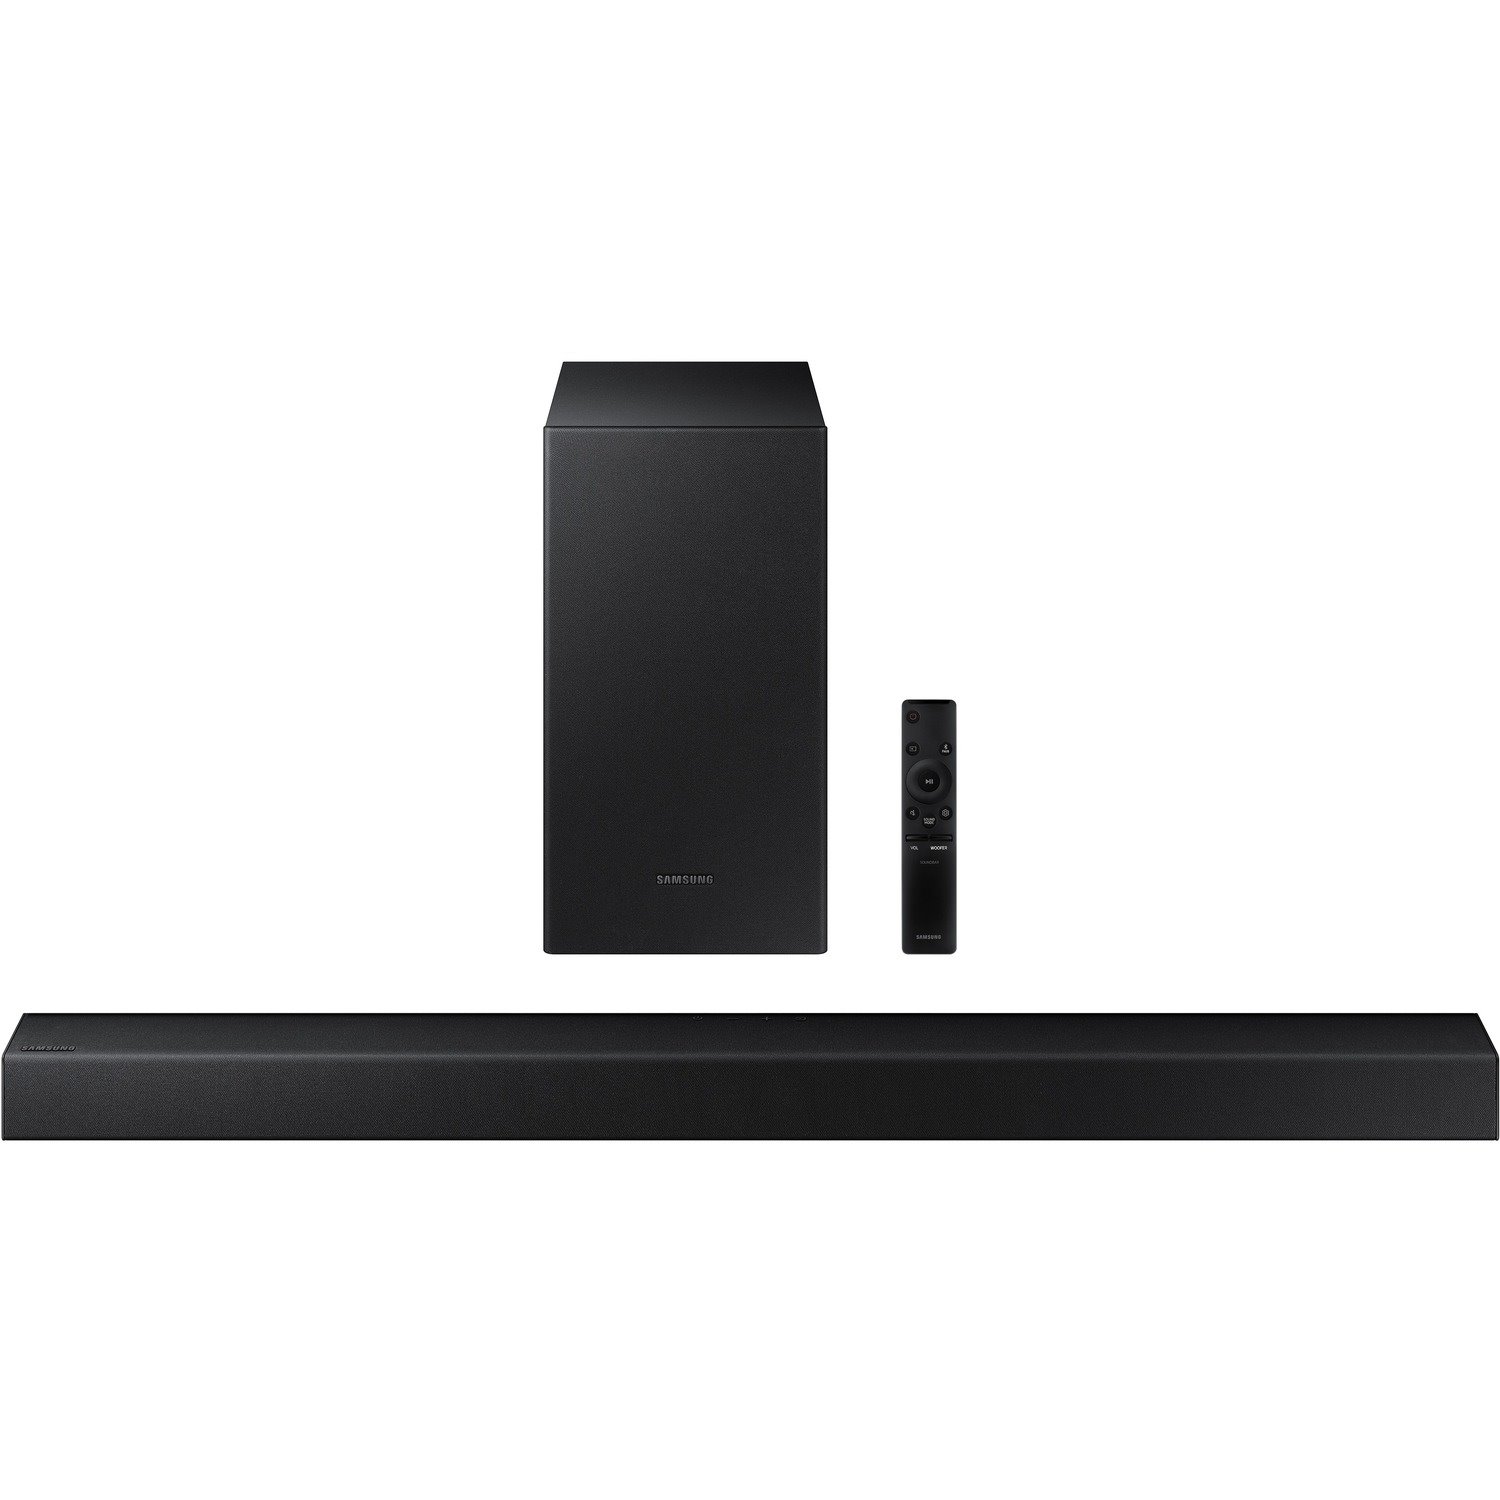 Samsung HW-T450 2.1 Bluetooth Speaker System - Black